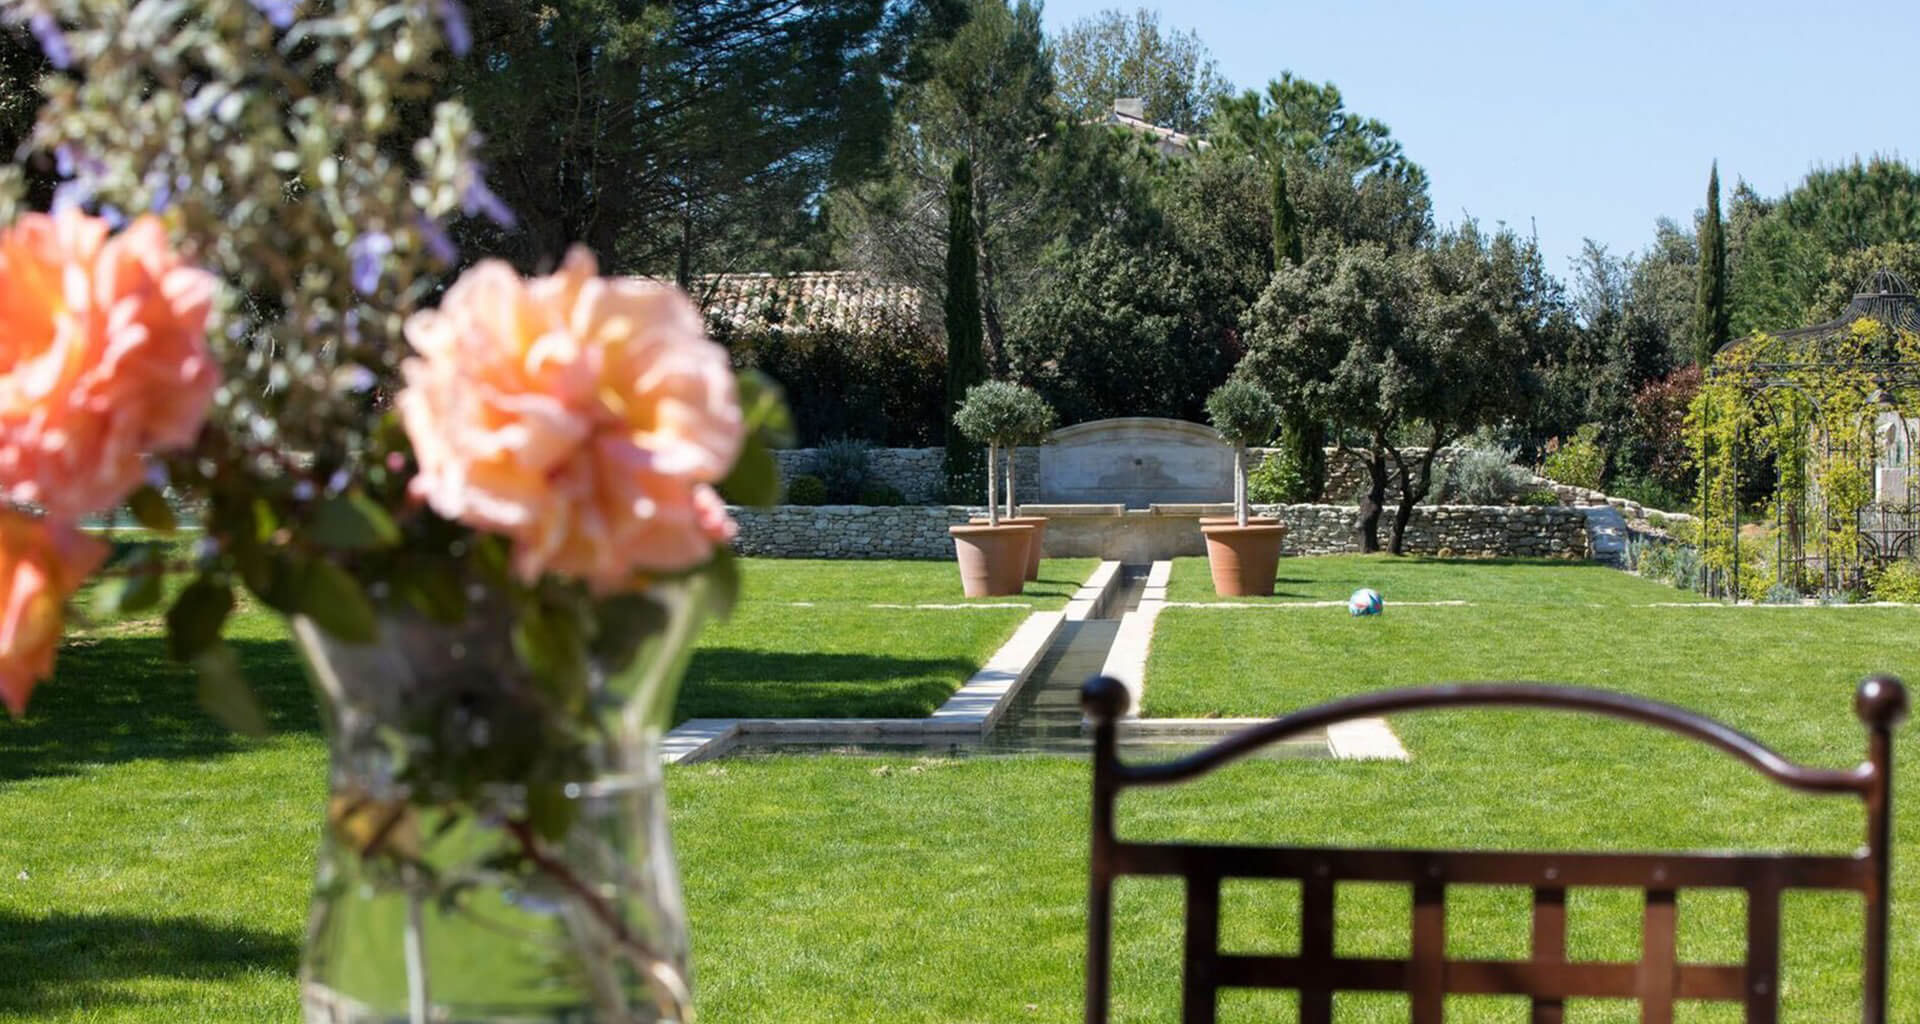 Provence Villa Gallery